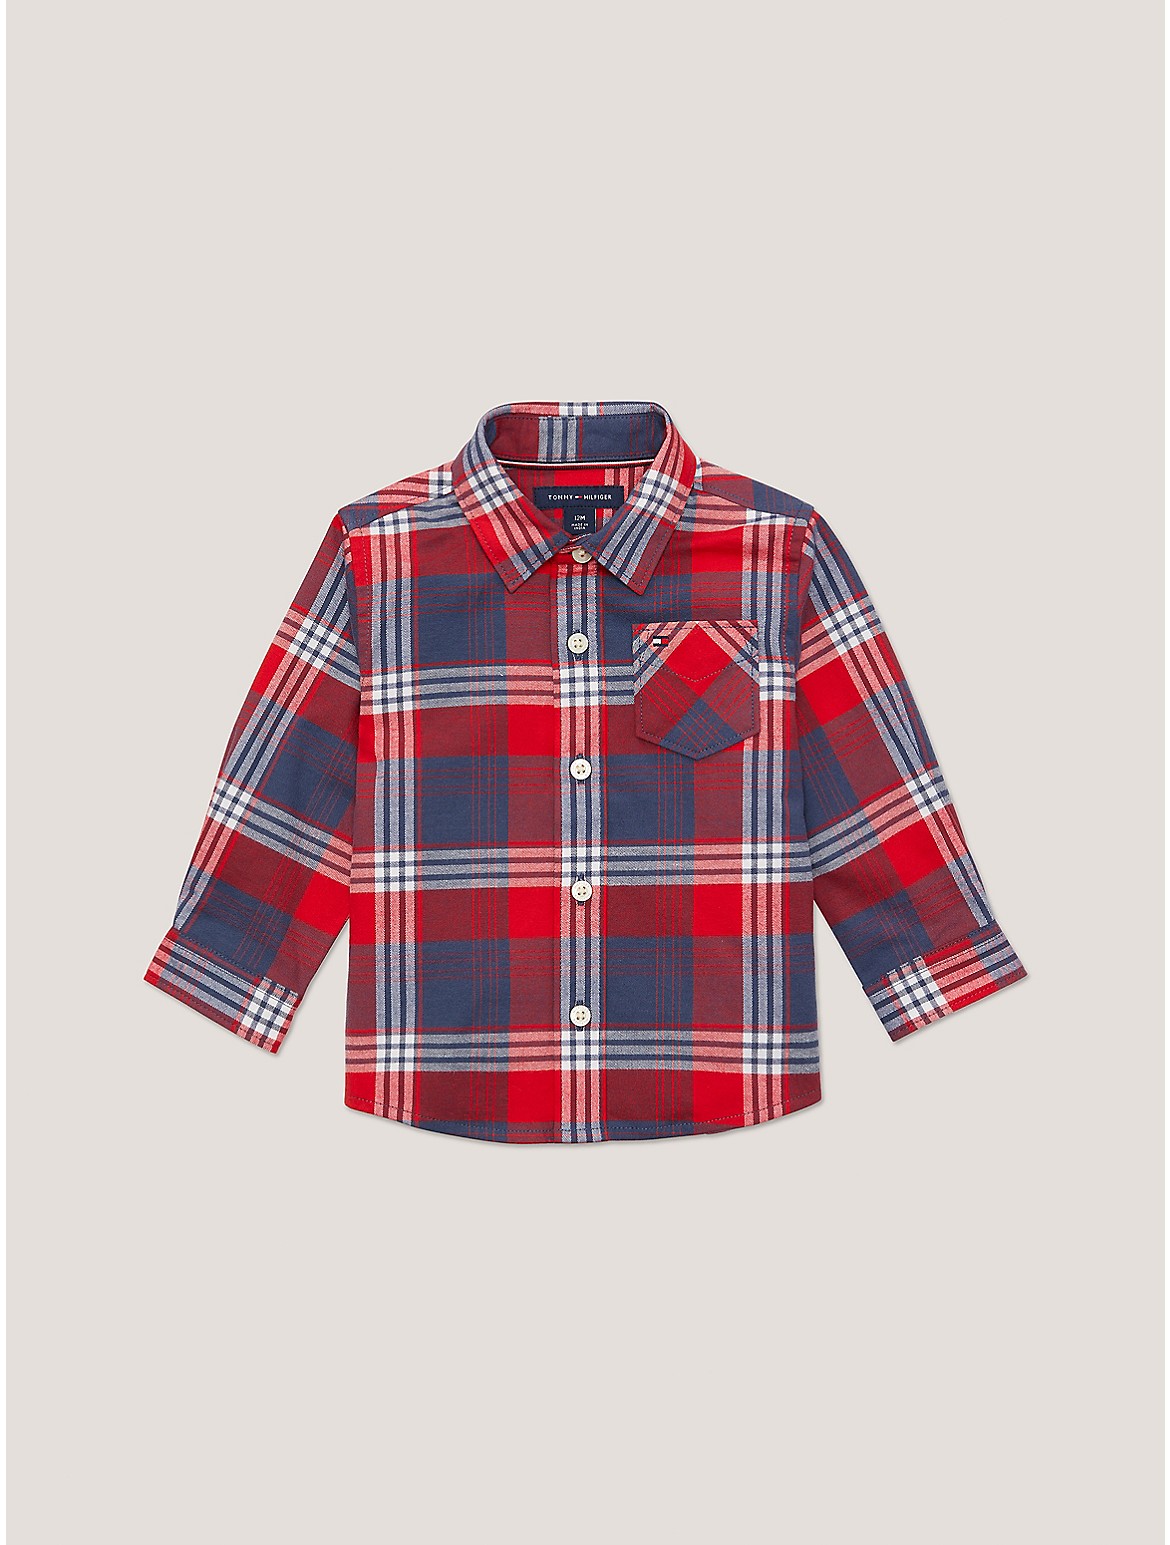 Tommy Hilfiger Boys' Babies' Plaid Shirt - Red - 24M